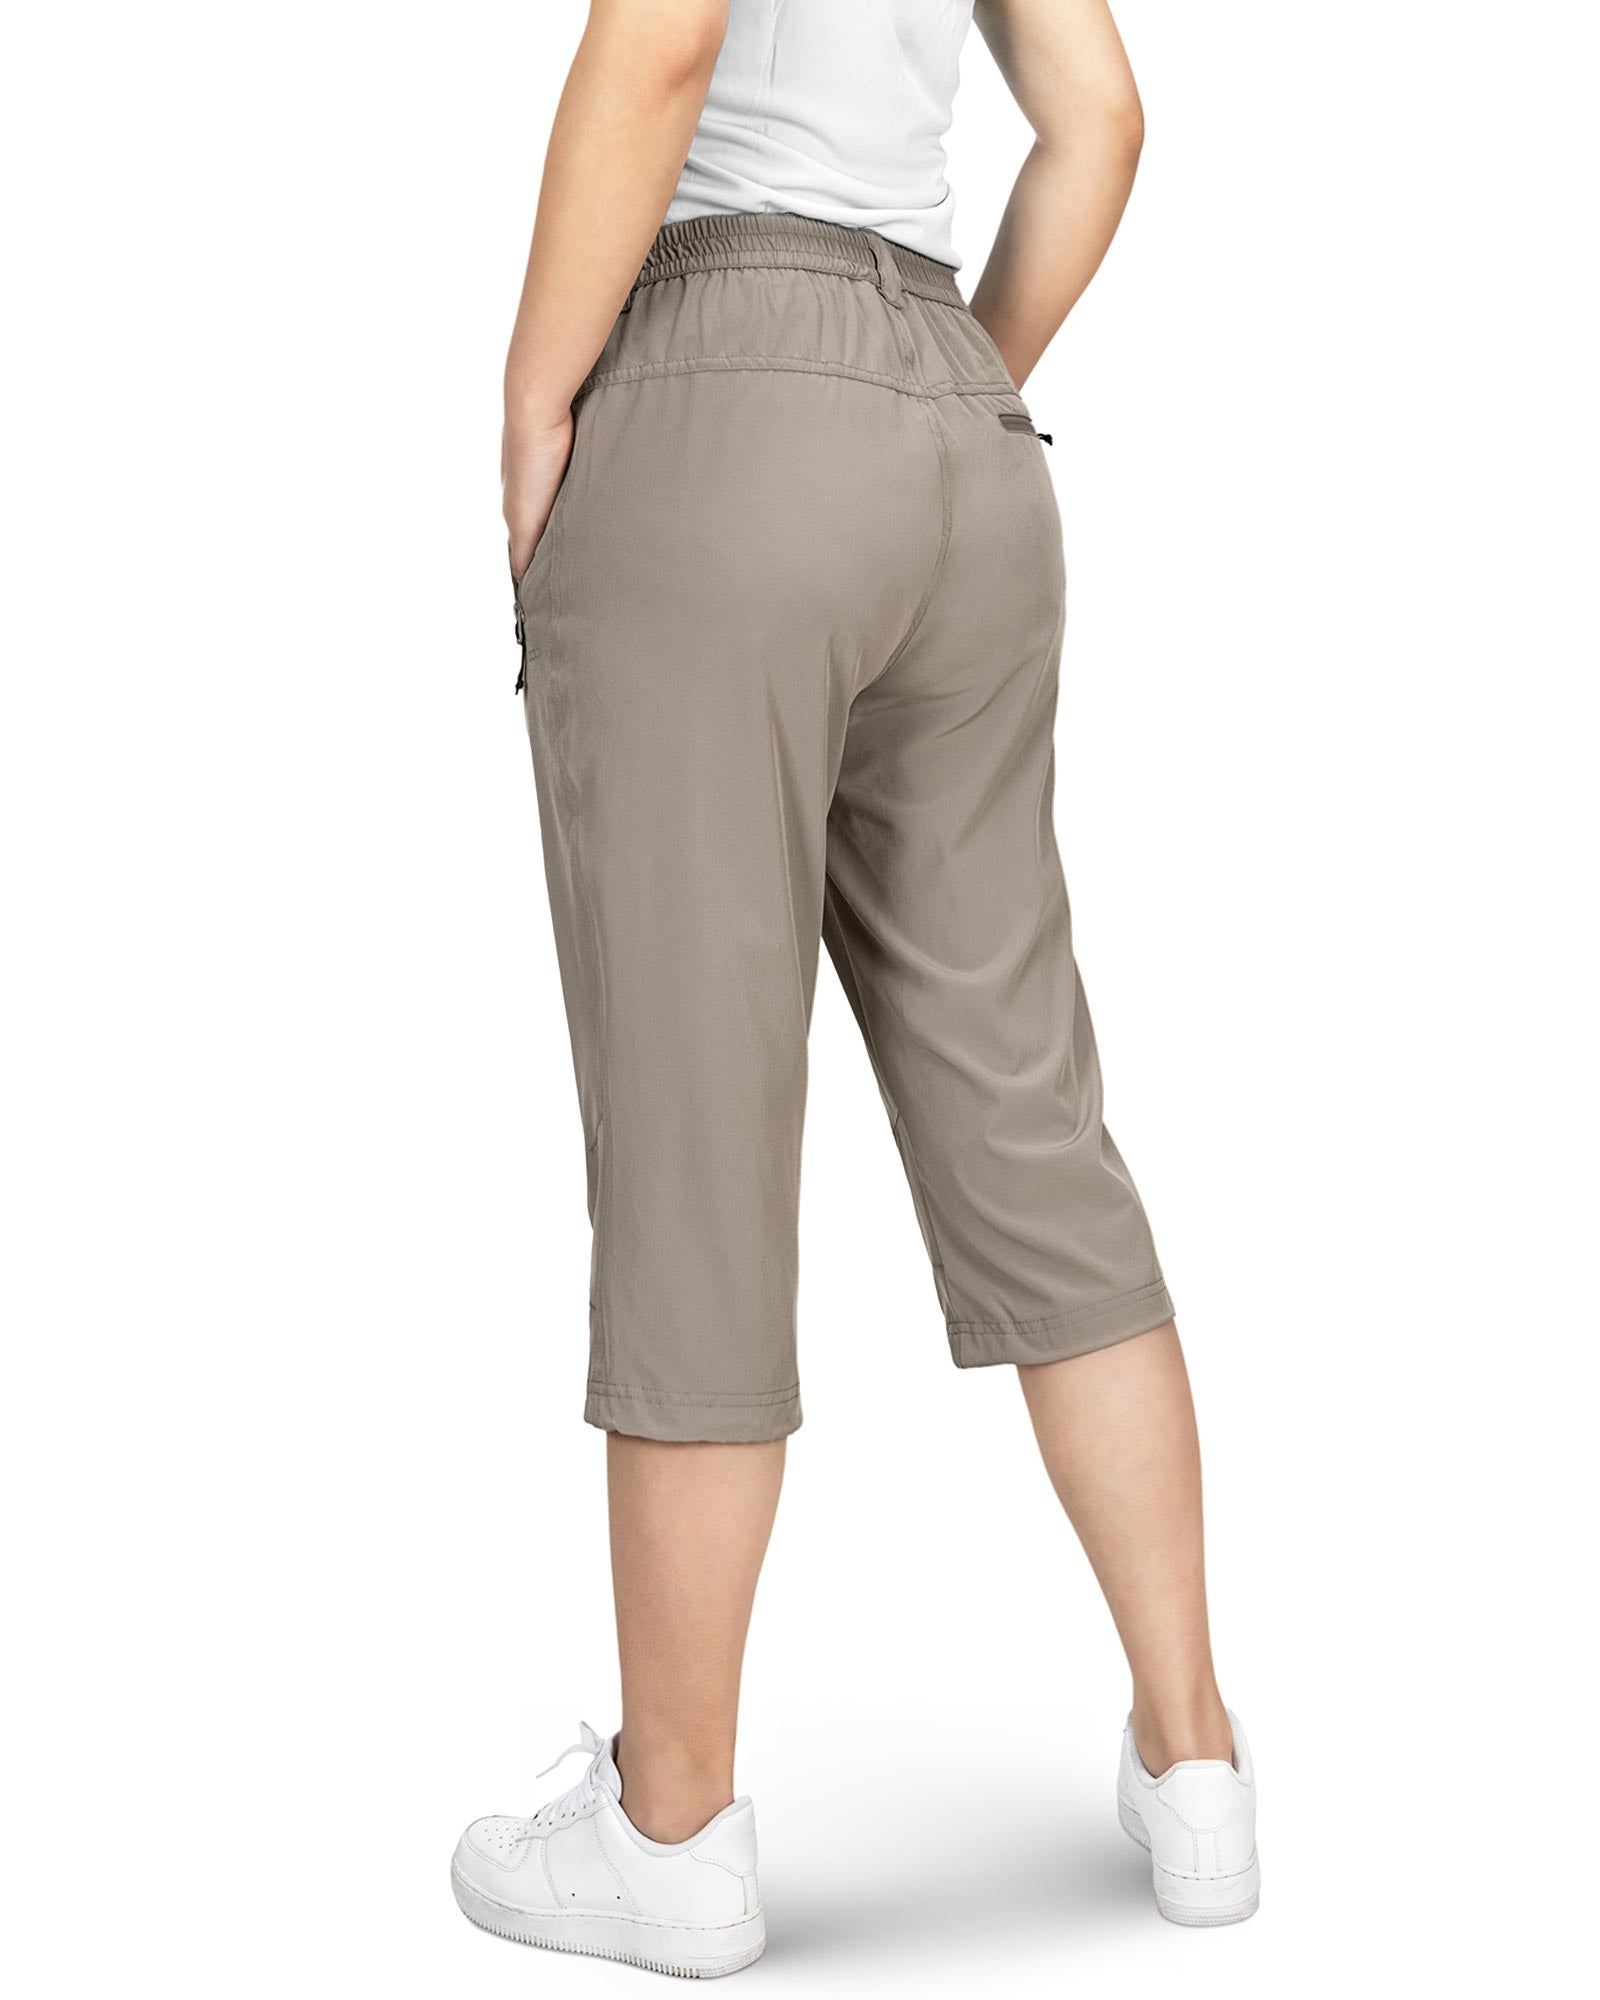 MOCOLY Women's 3/4 Cargo Hiking Pants | Pants, Hiking pants, Clothes design